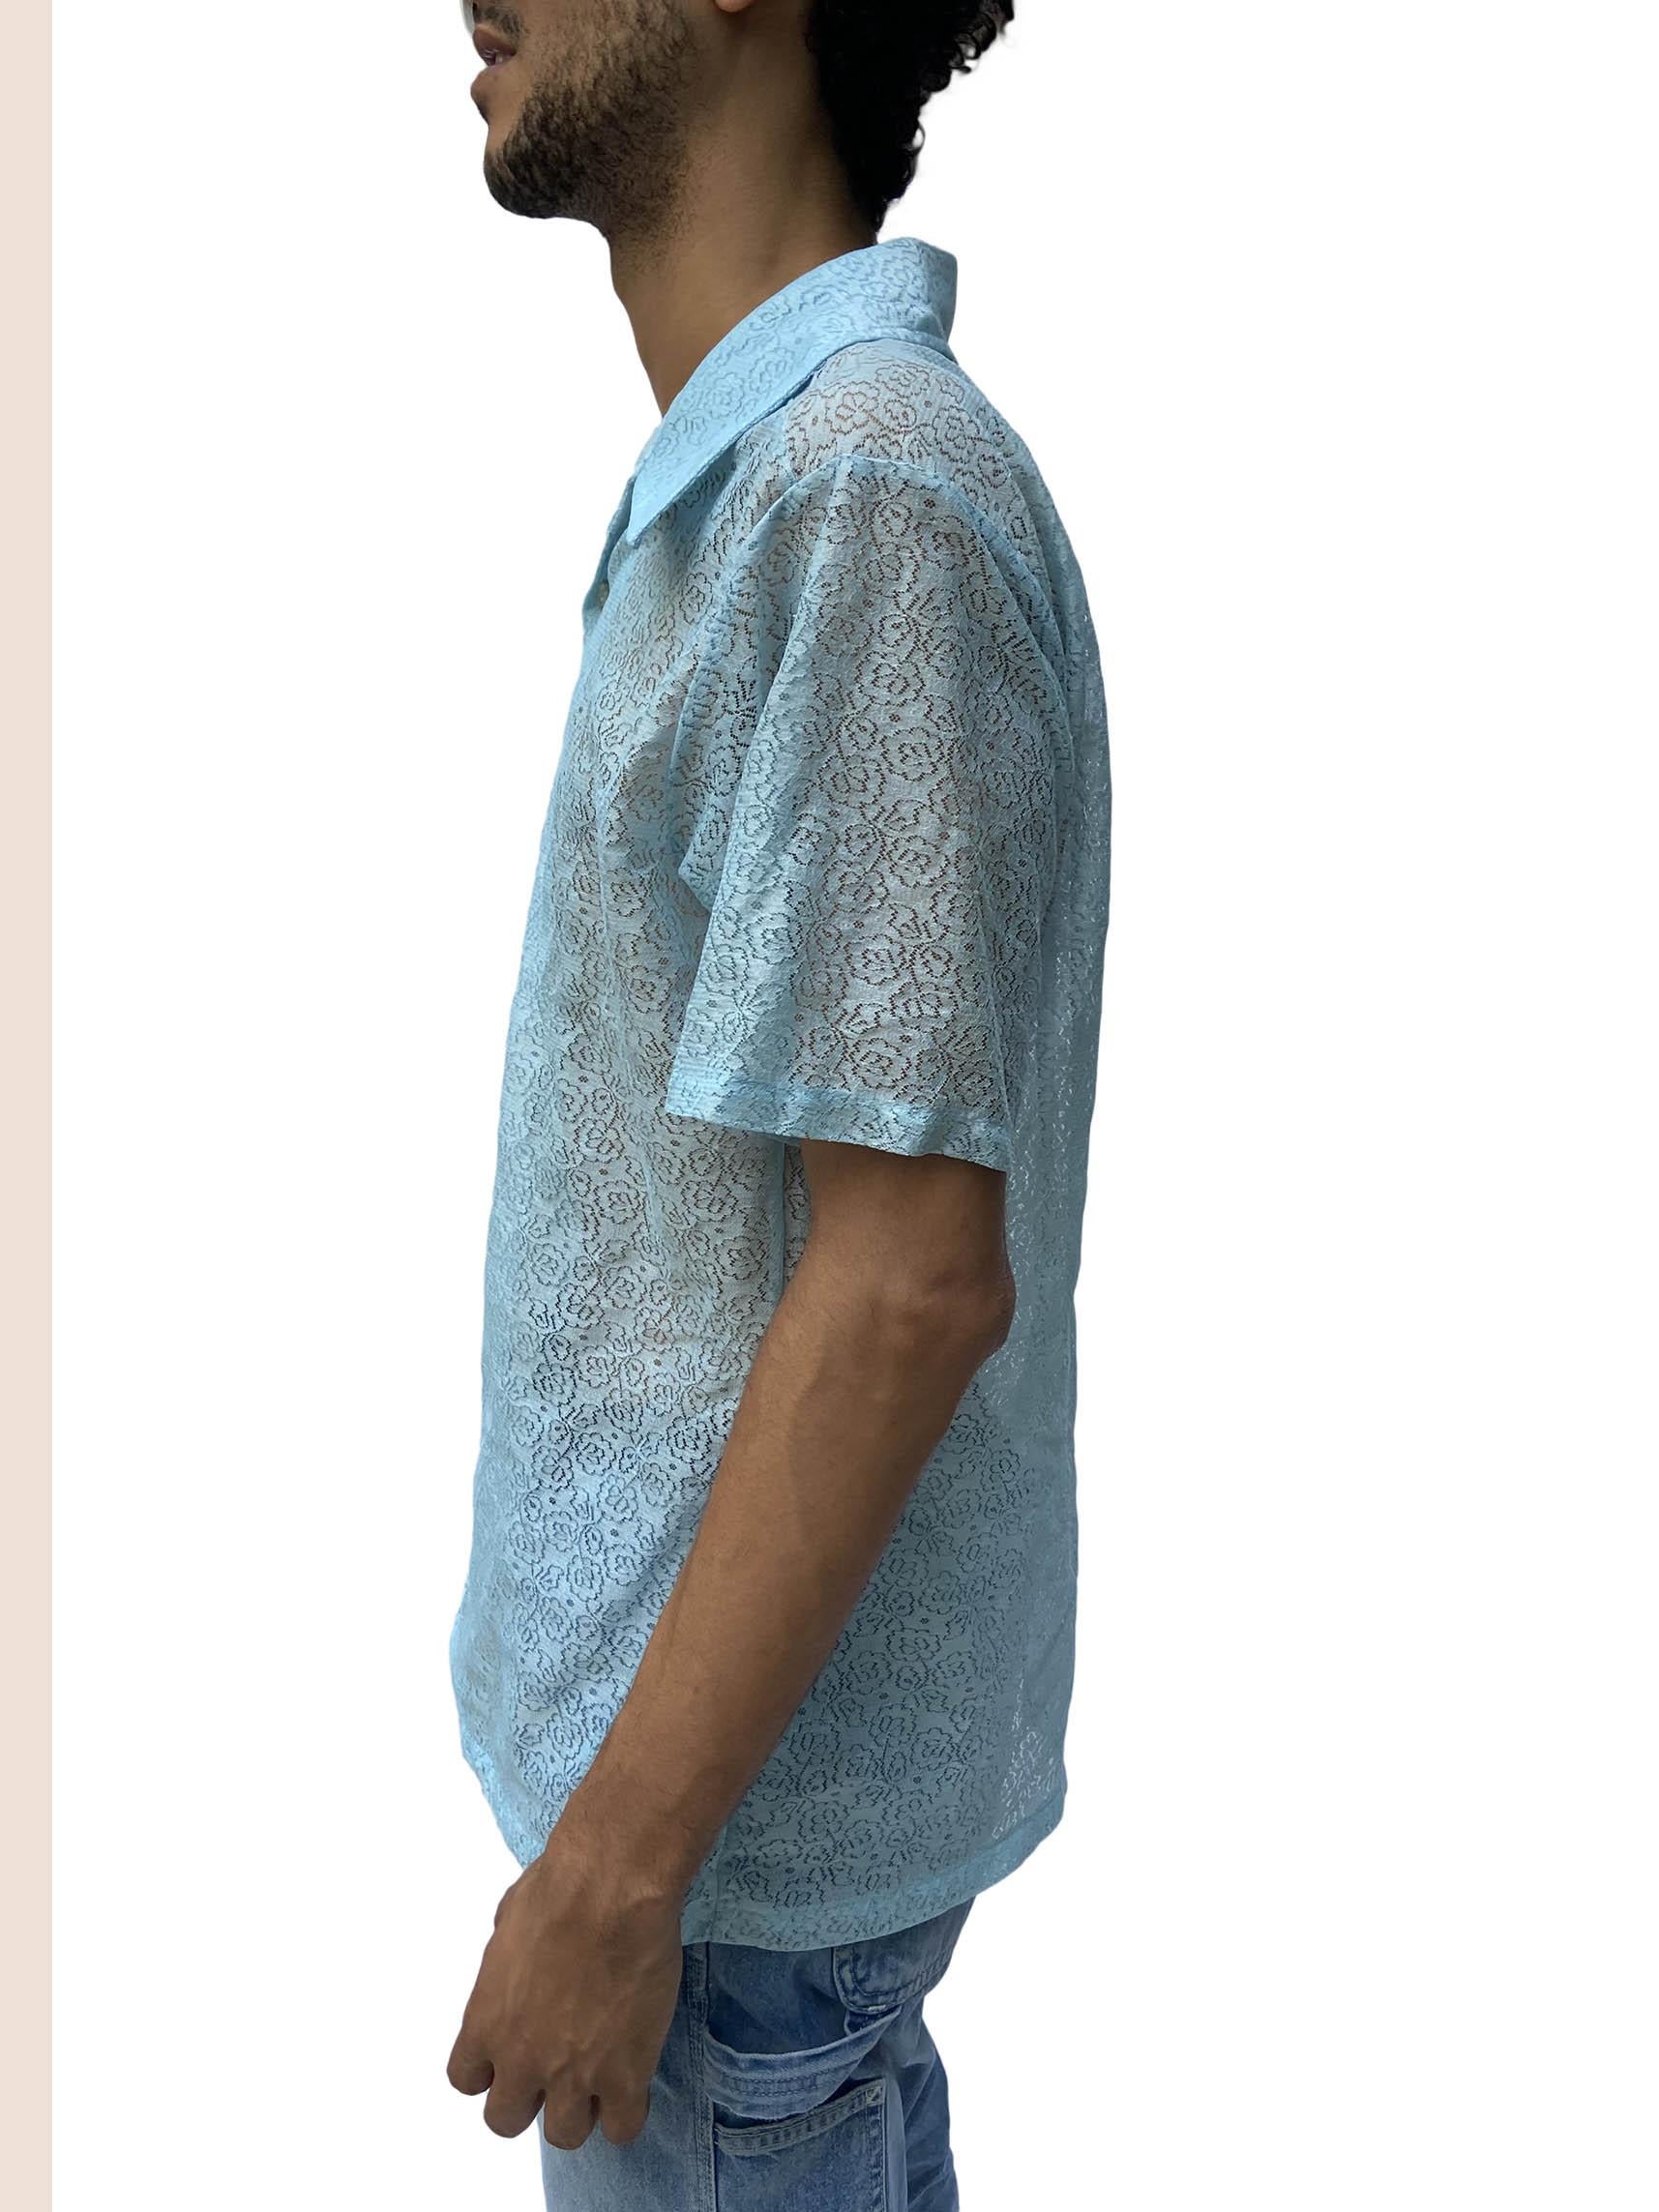 A Maxino California Design 1960S Powdered Blue Polyester Lace Men's Short Sleeve Shirt 